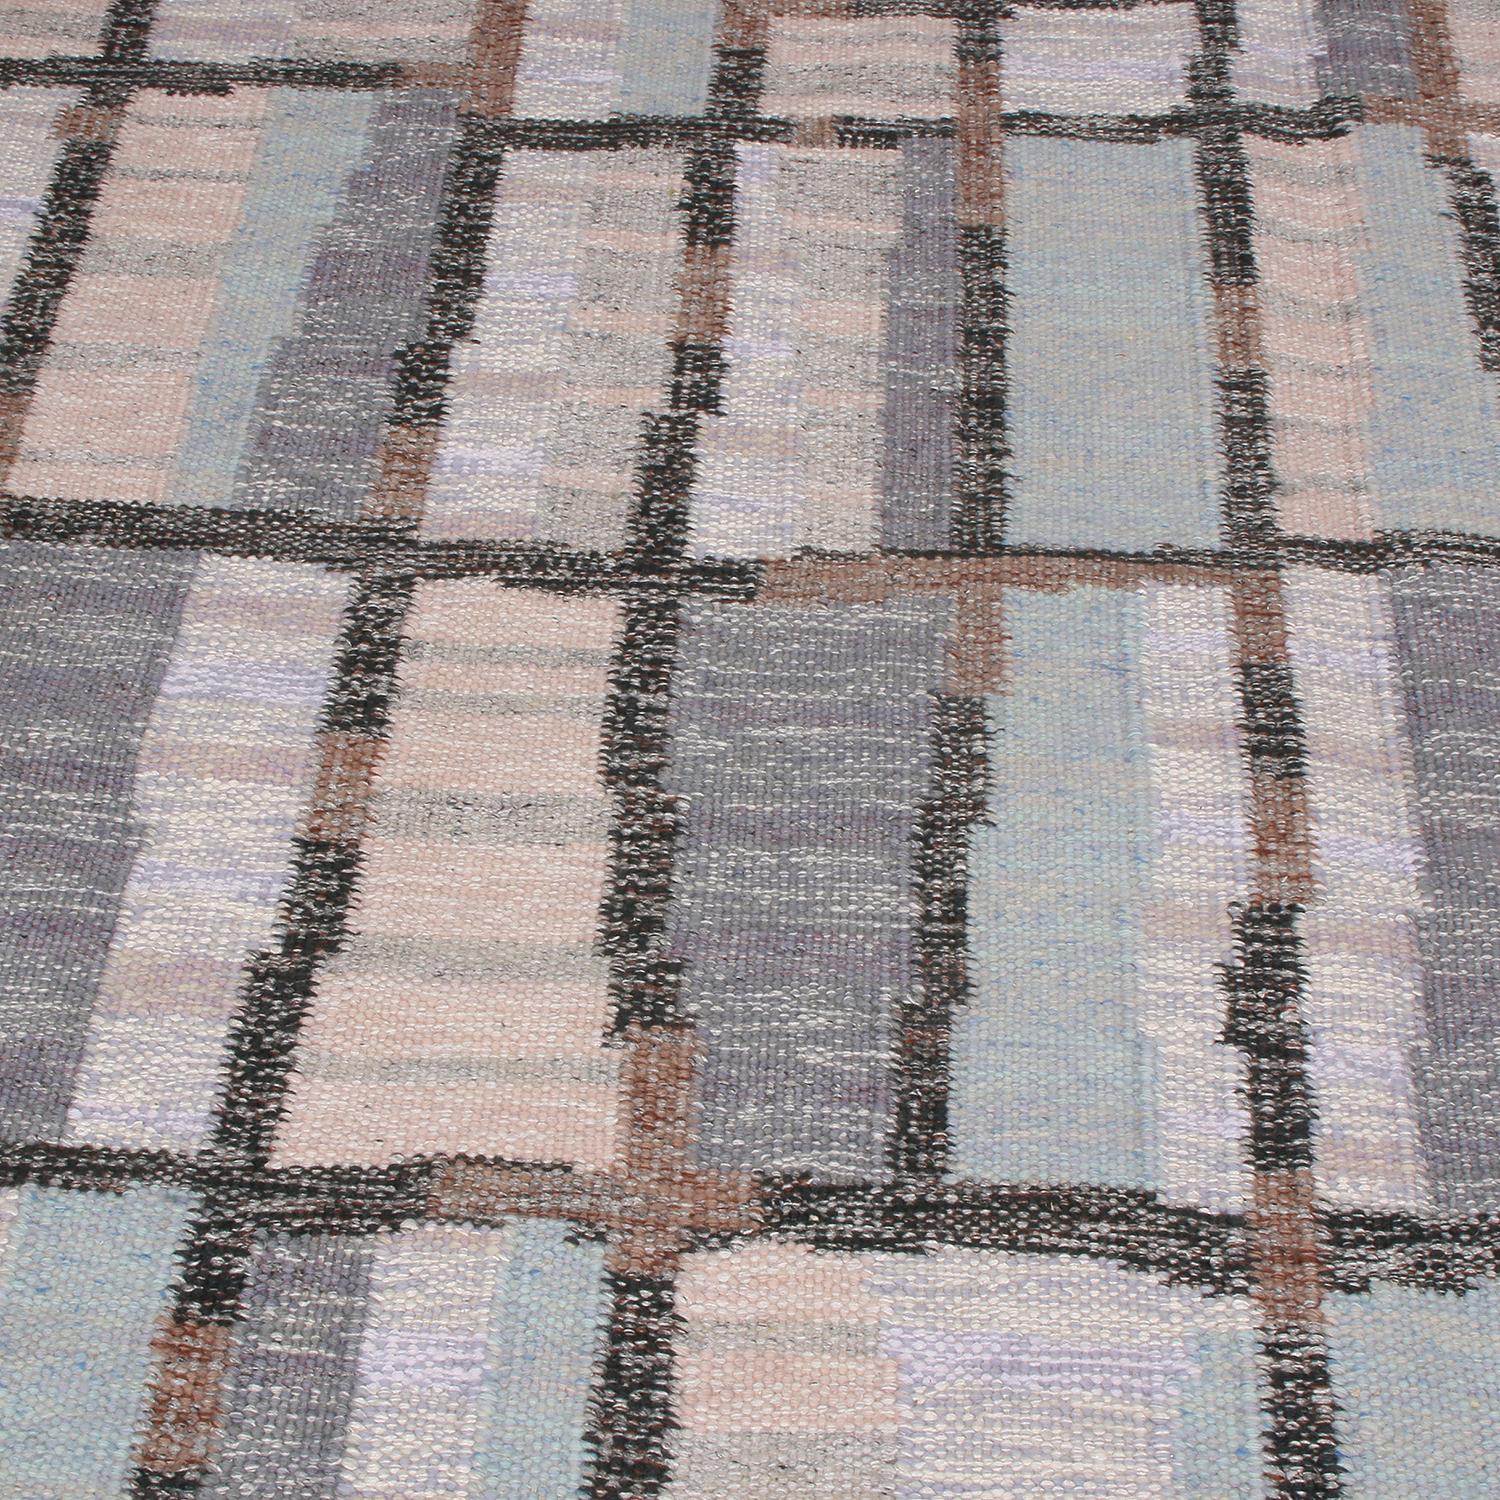 Indian Rug & Kilim’s Scandinavian-Inspired Blue-Gray and Beige Natural Wool Kilim Rug